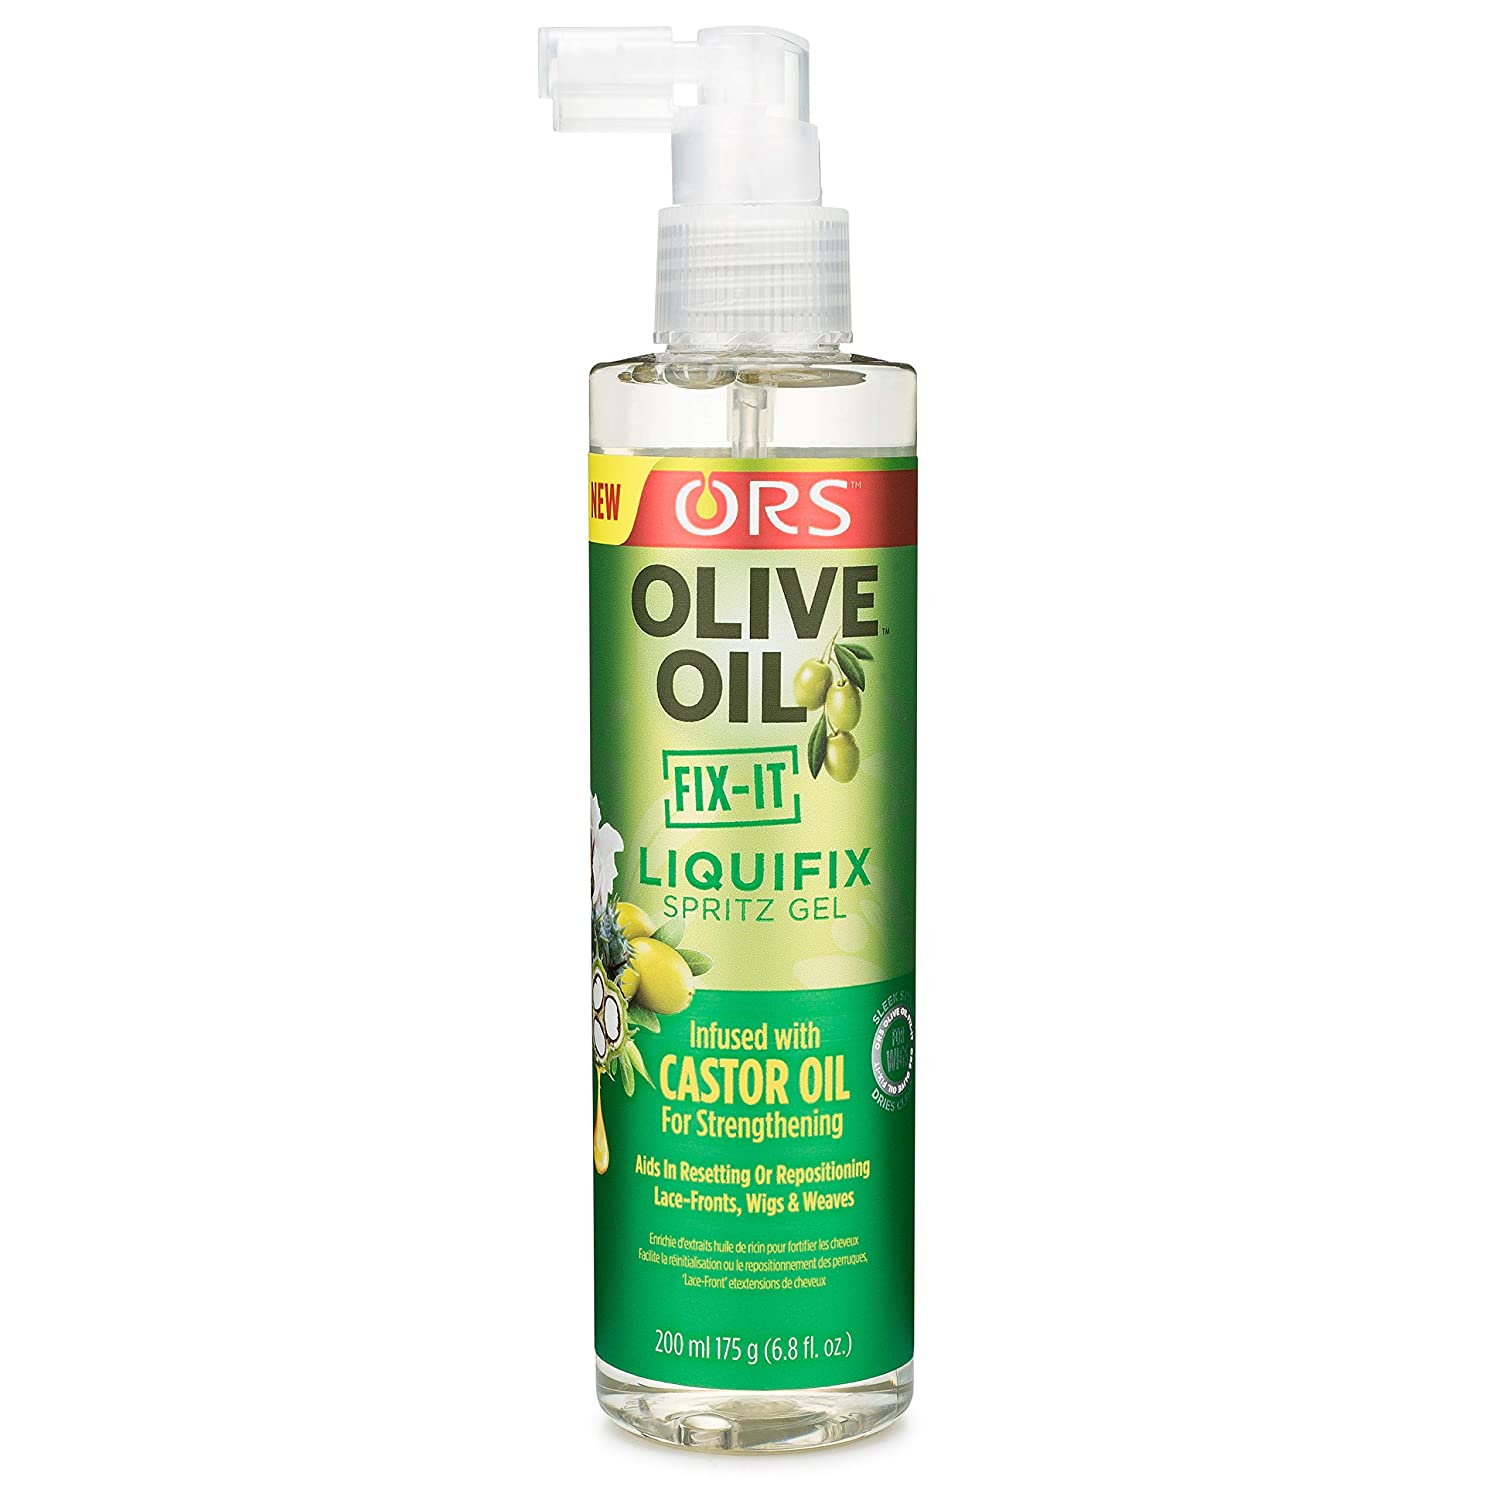 ORS Olive Oil Fix It Liquifix Spritz Gel - 6.8oz